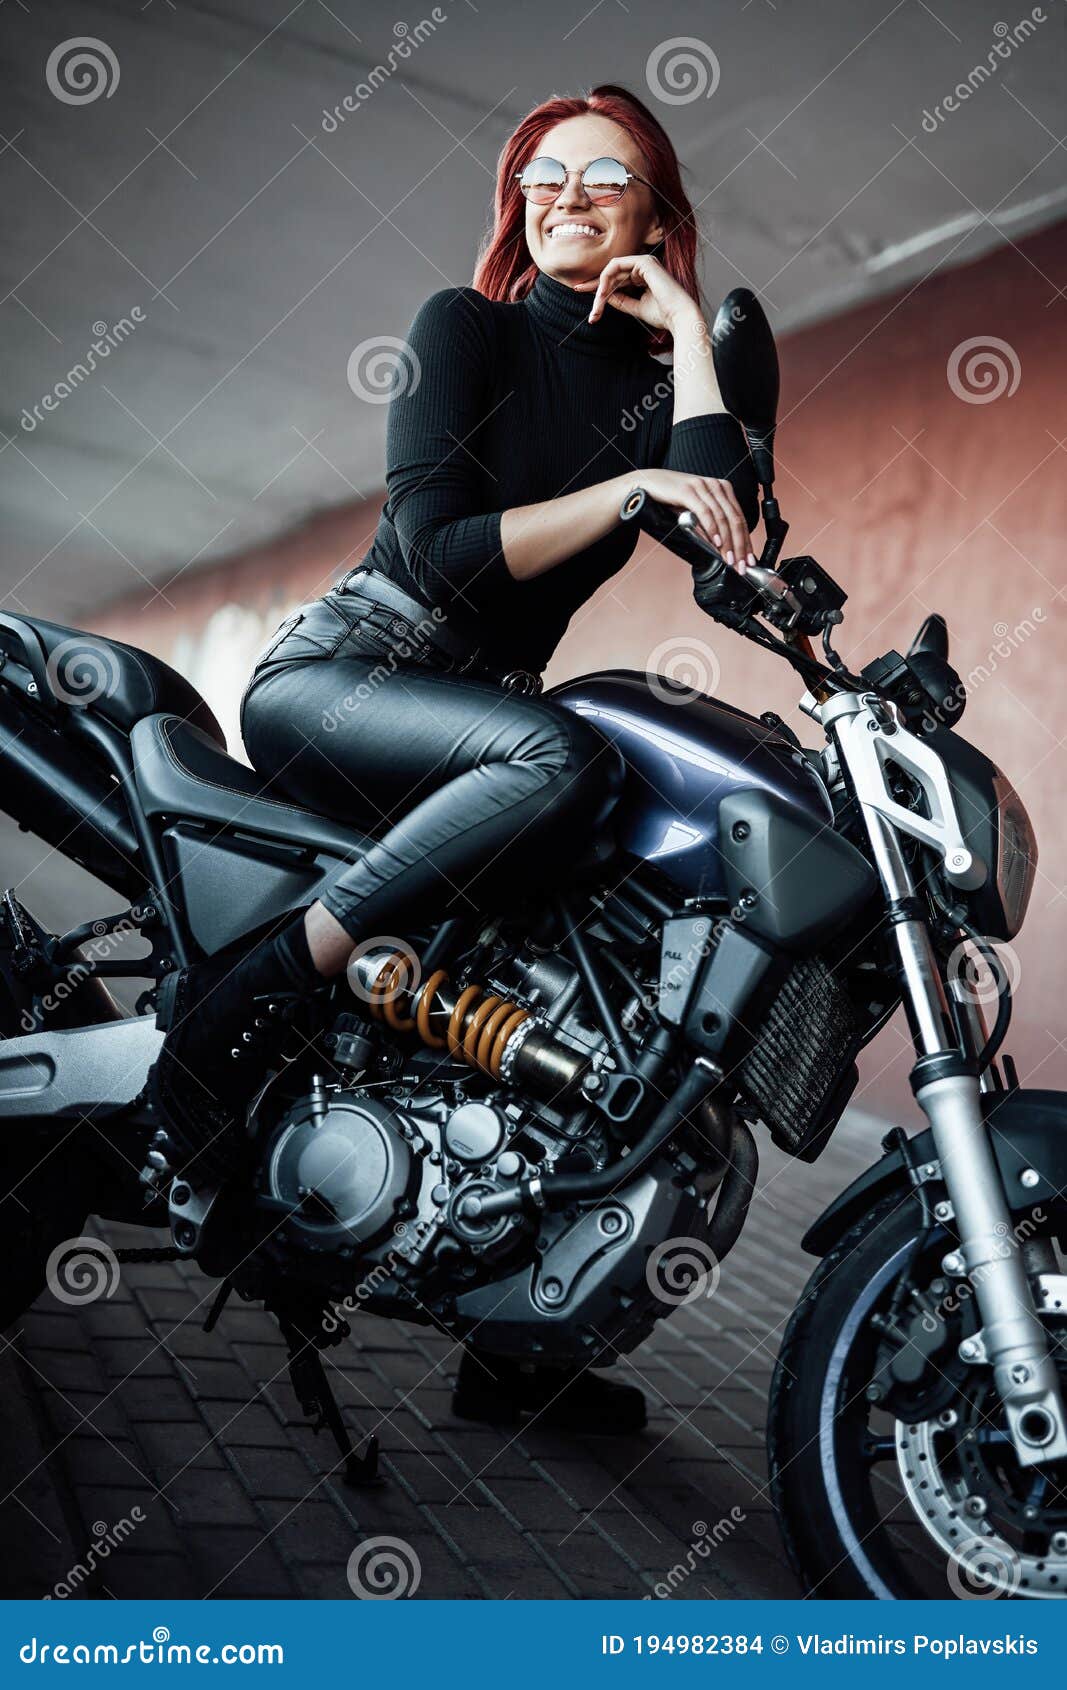 carolyn honeycutt add photo pictures of biker woman